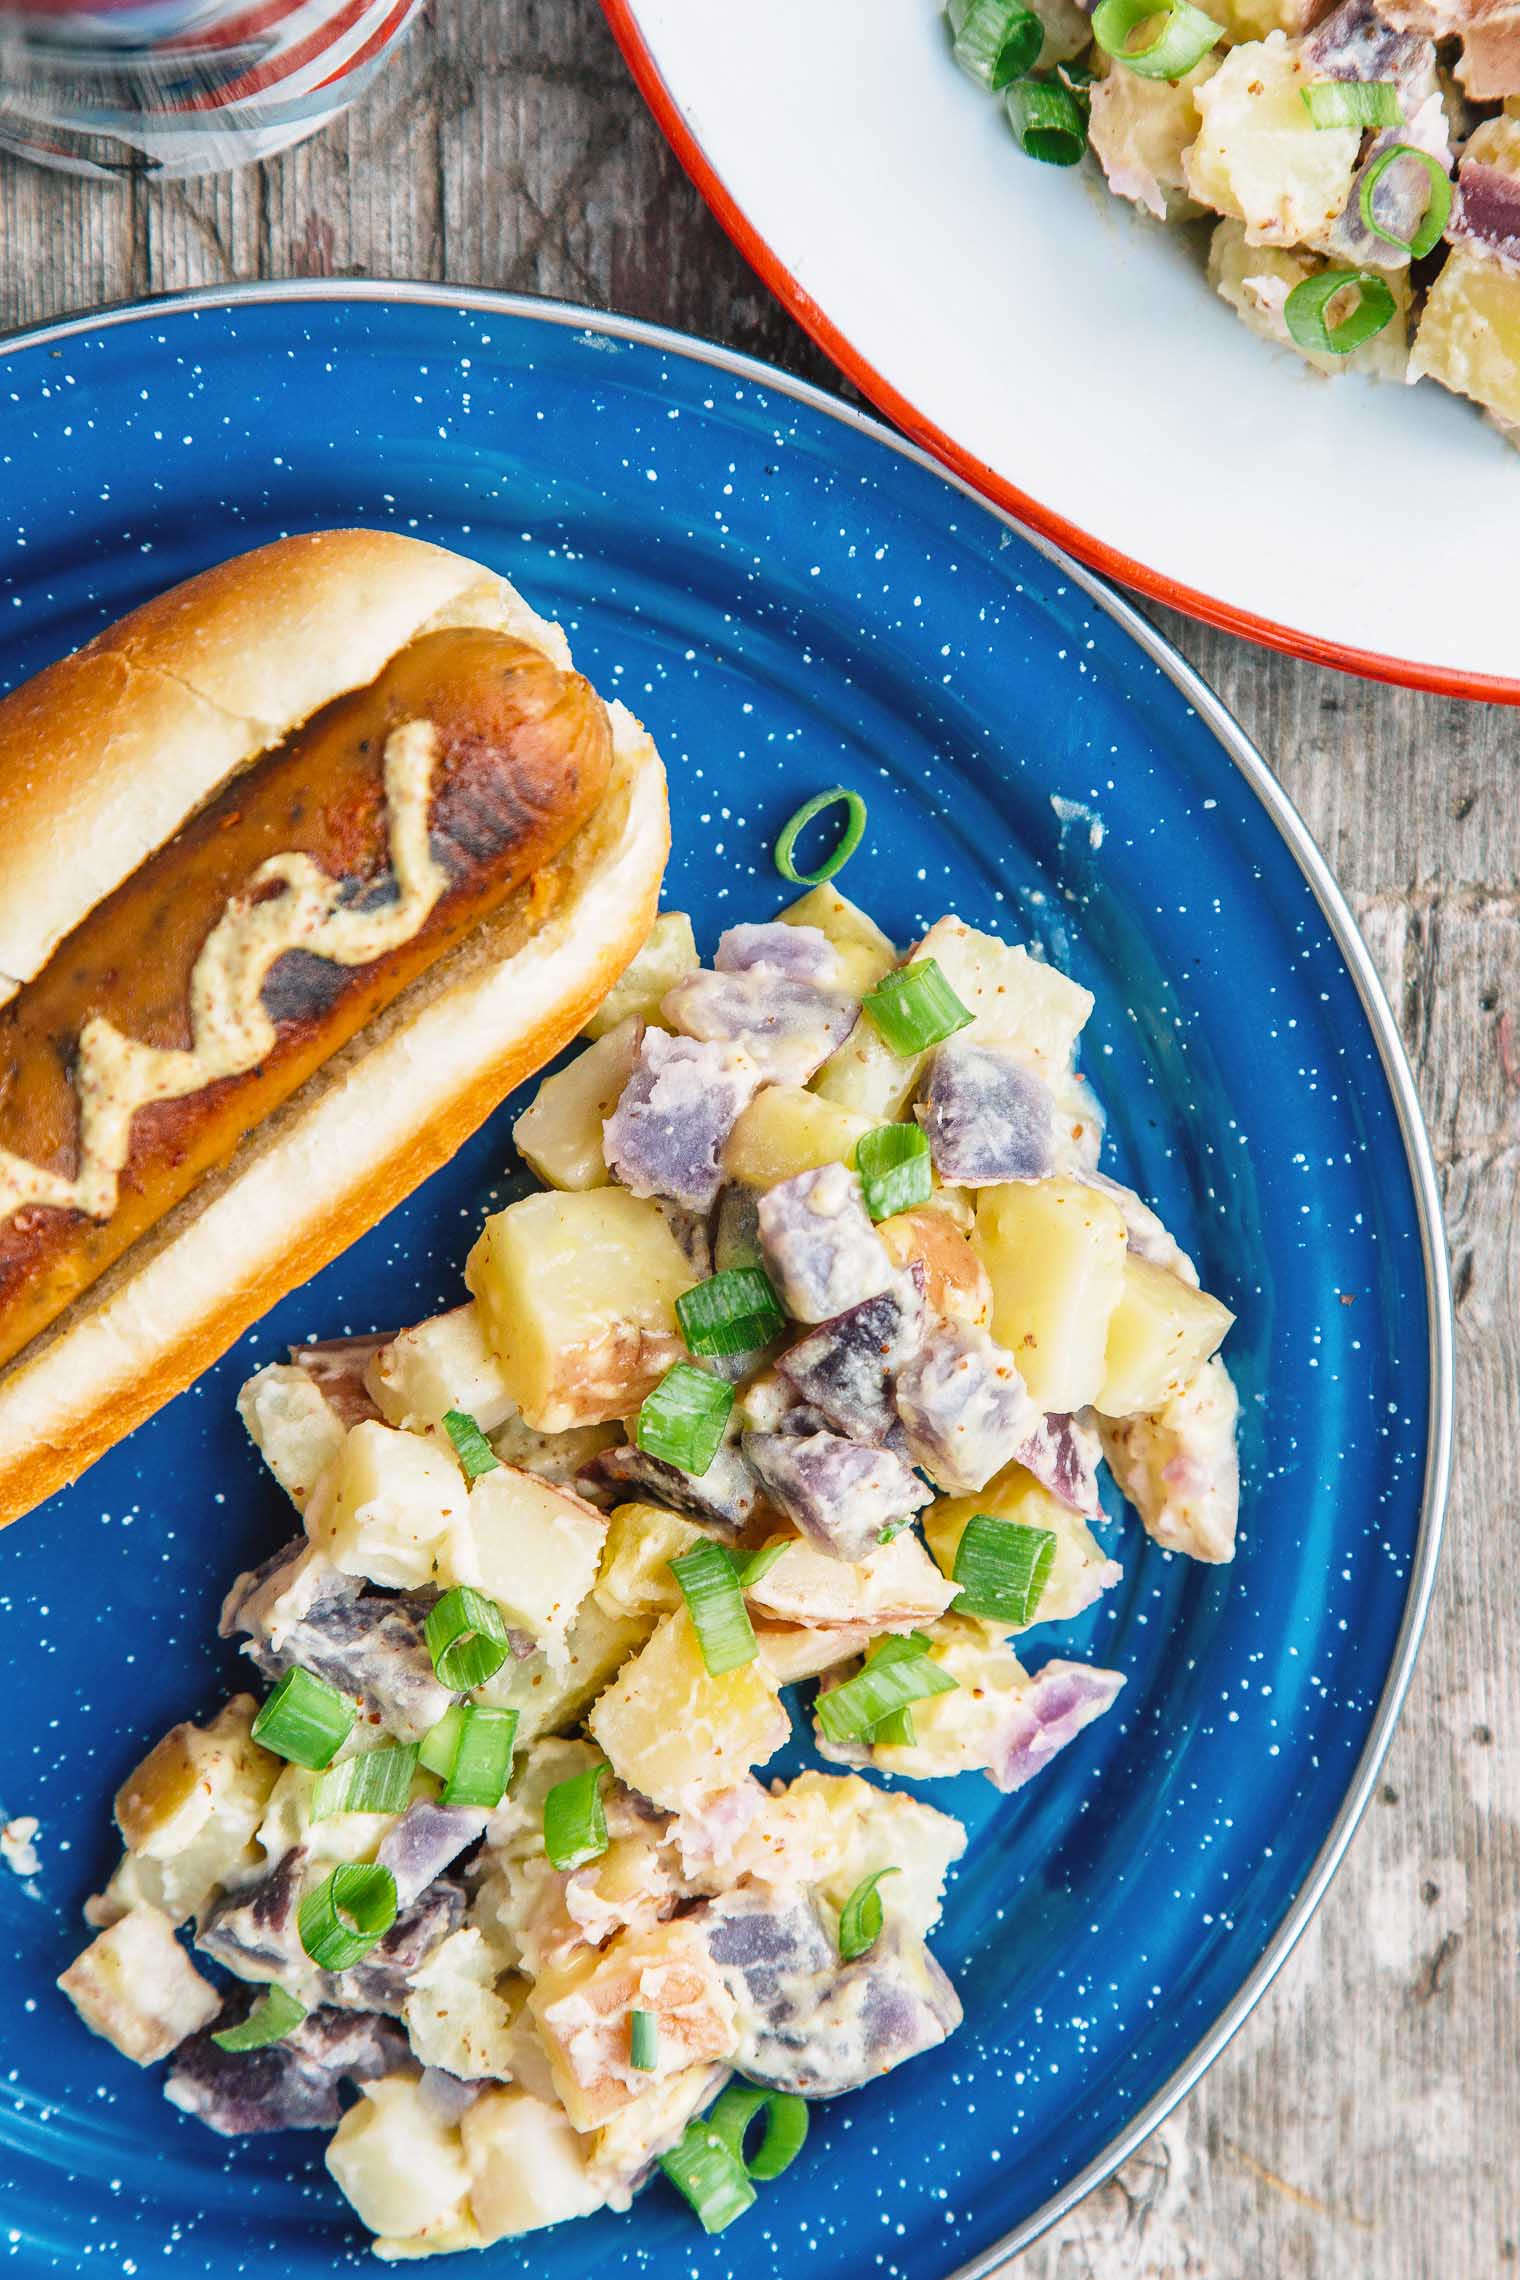 Potato salad and a hotdog on a blue camping plate